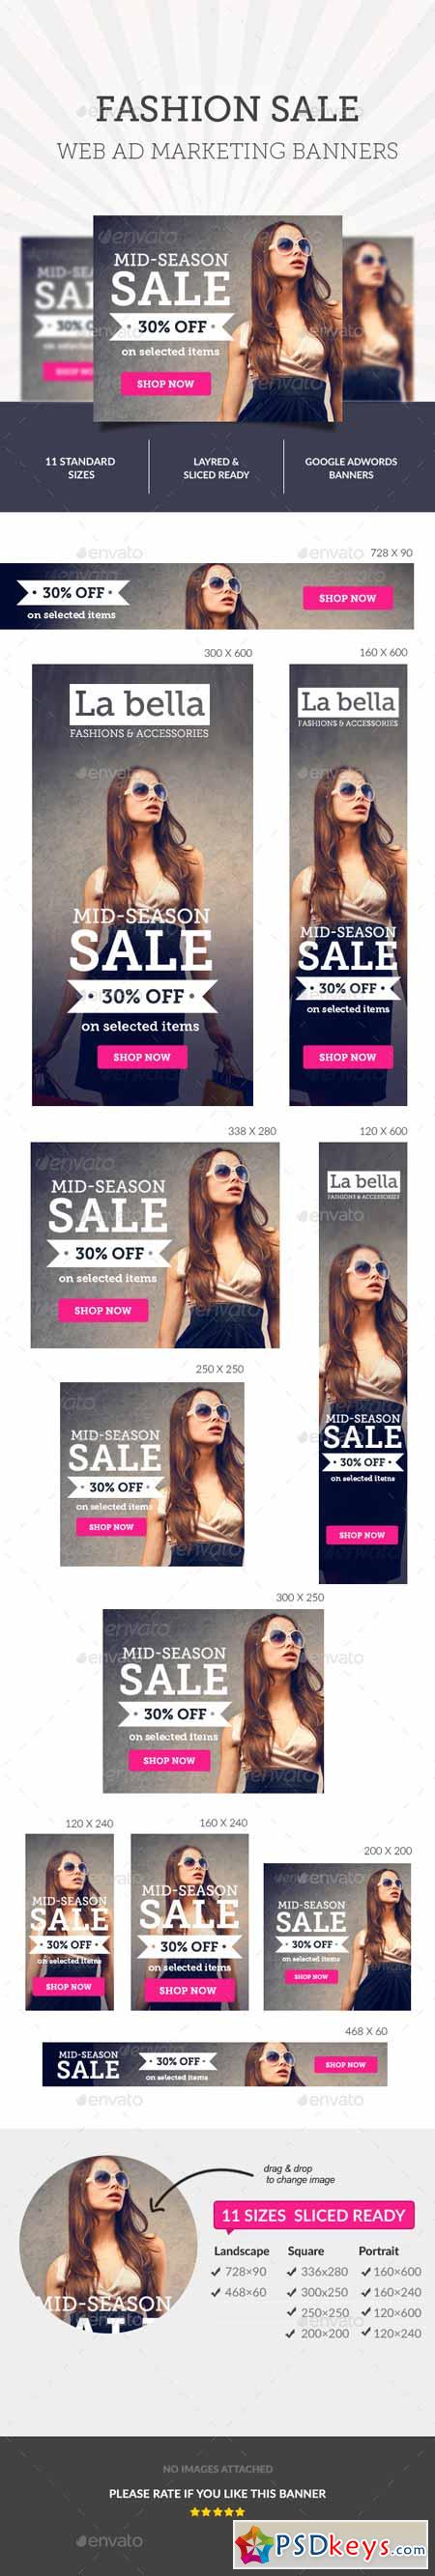 Fashion Sale Ad Banners 10274467